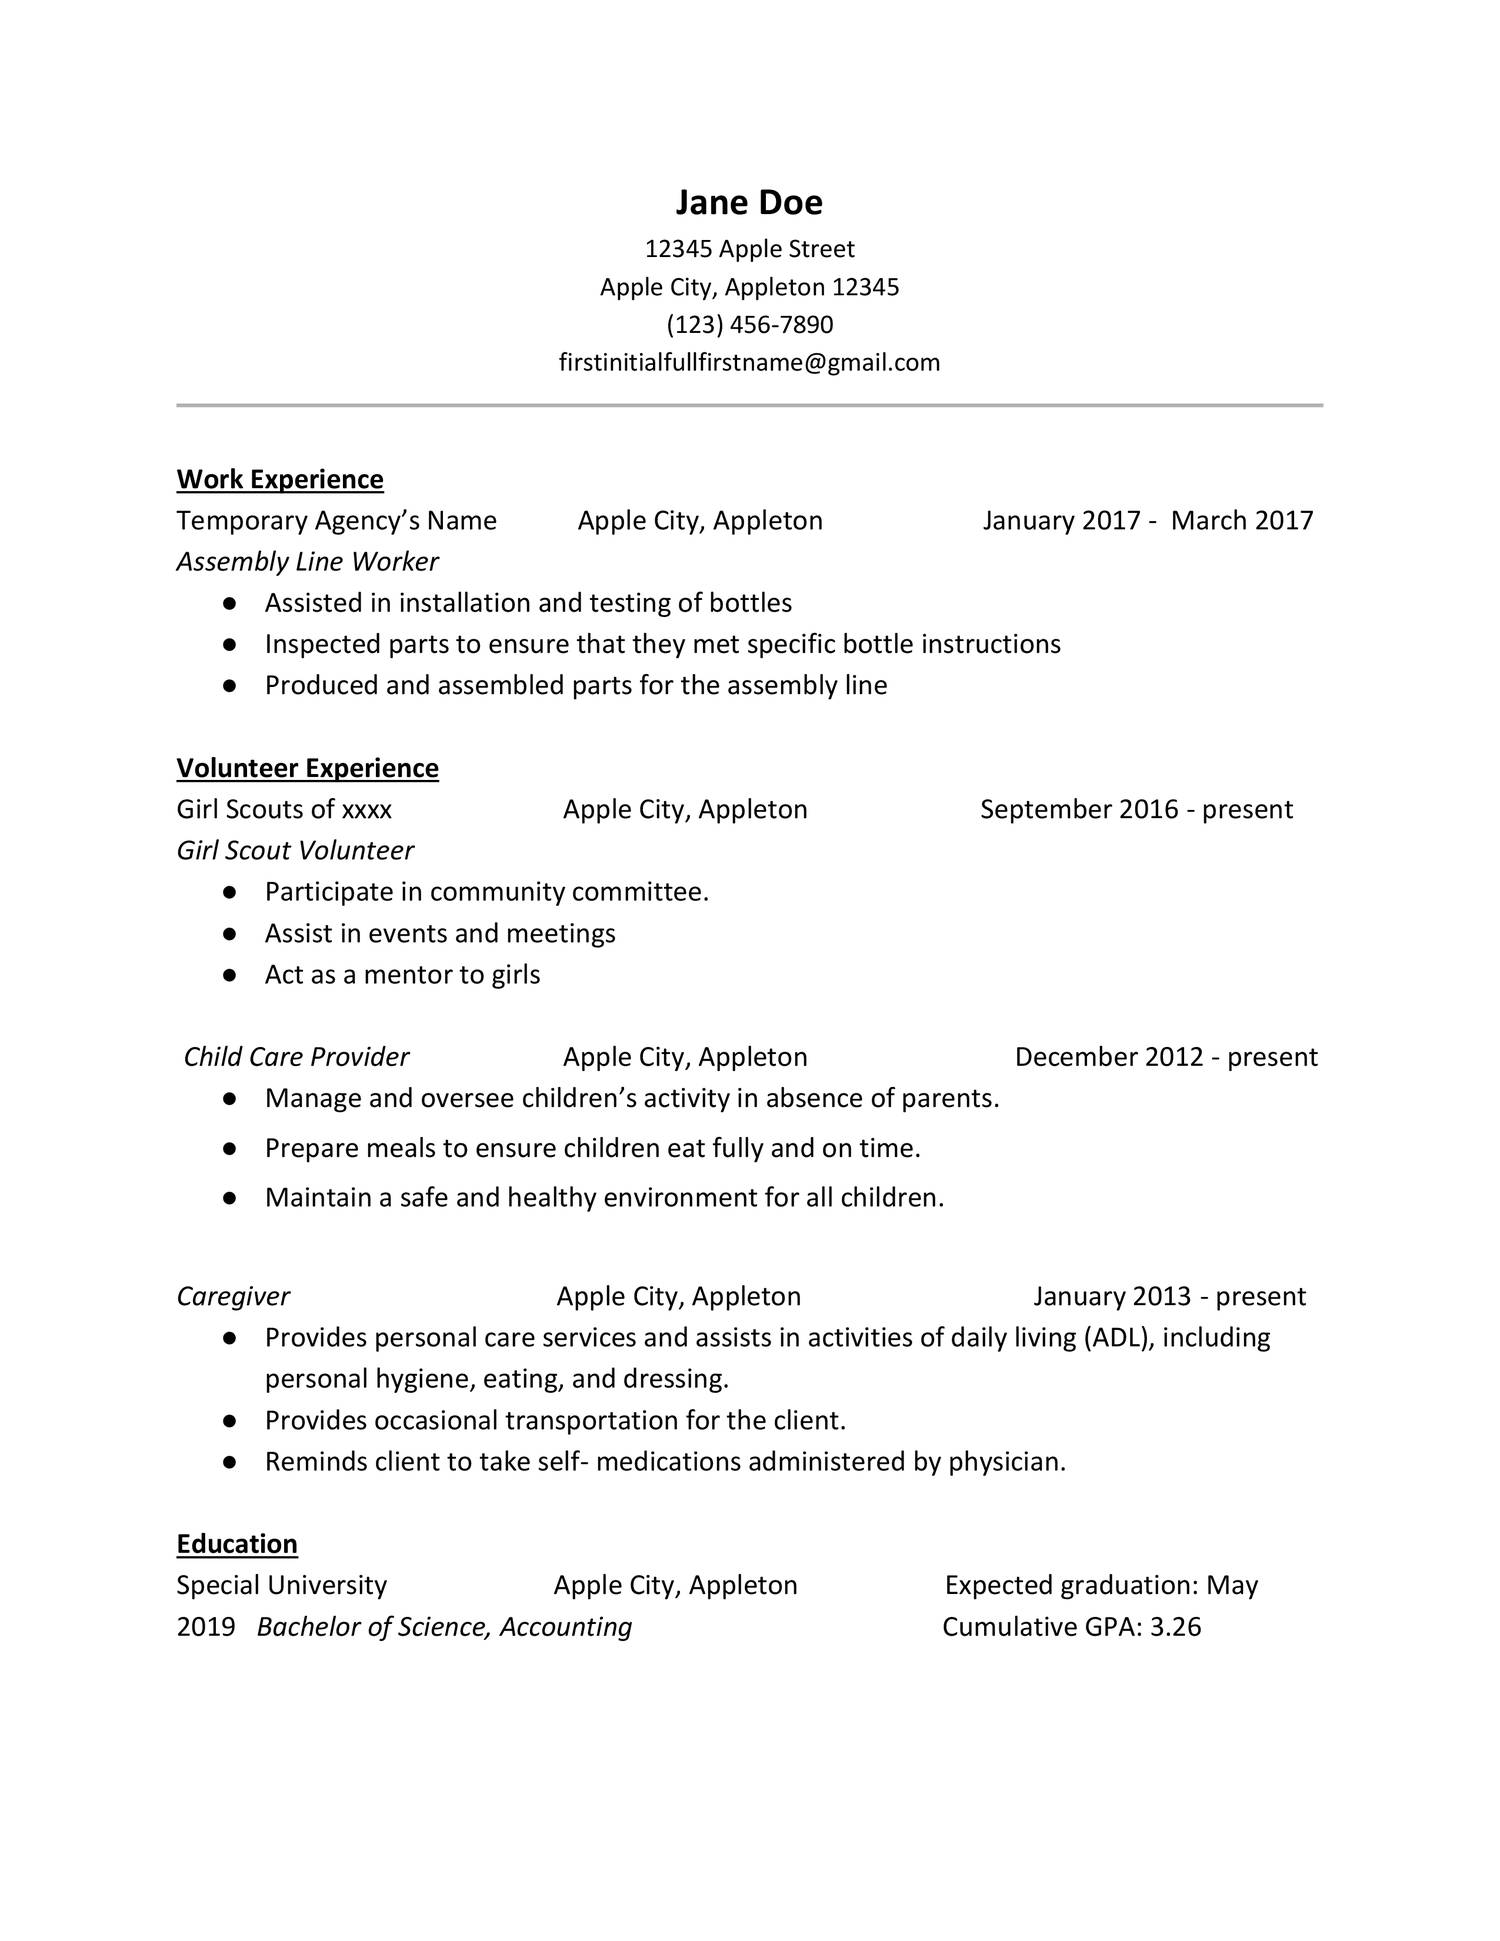 Fake resume.docx | DocDroid